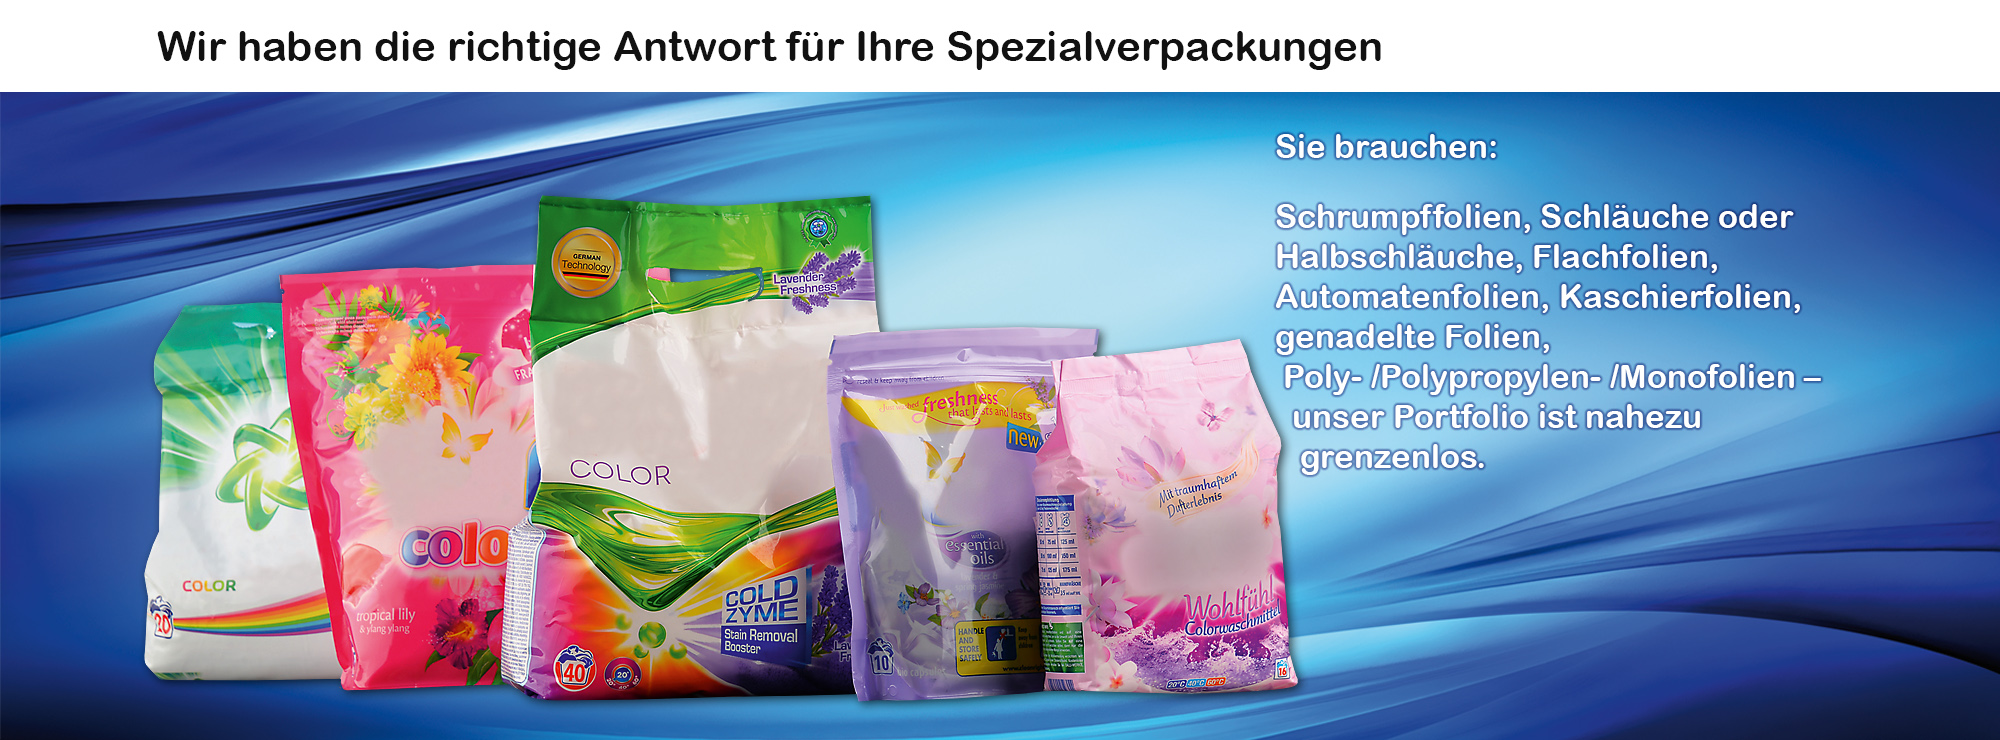 Austria Packaging Solution OptimaleAntwort